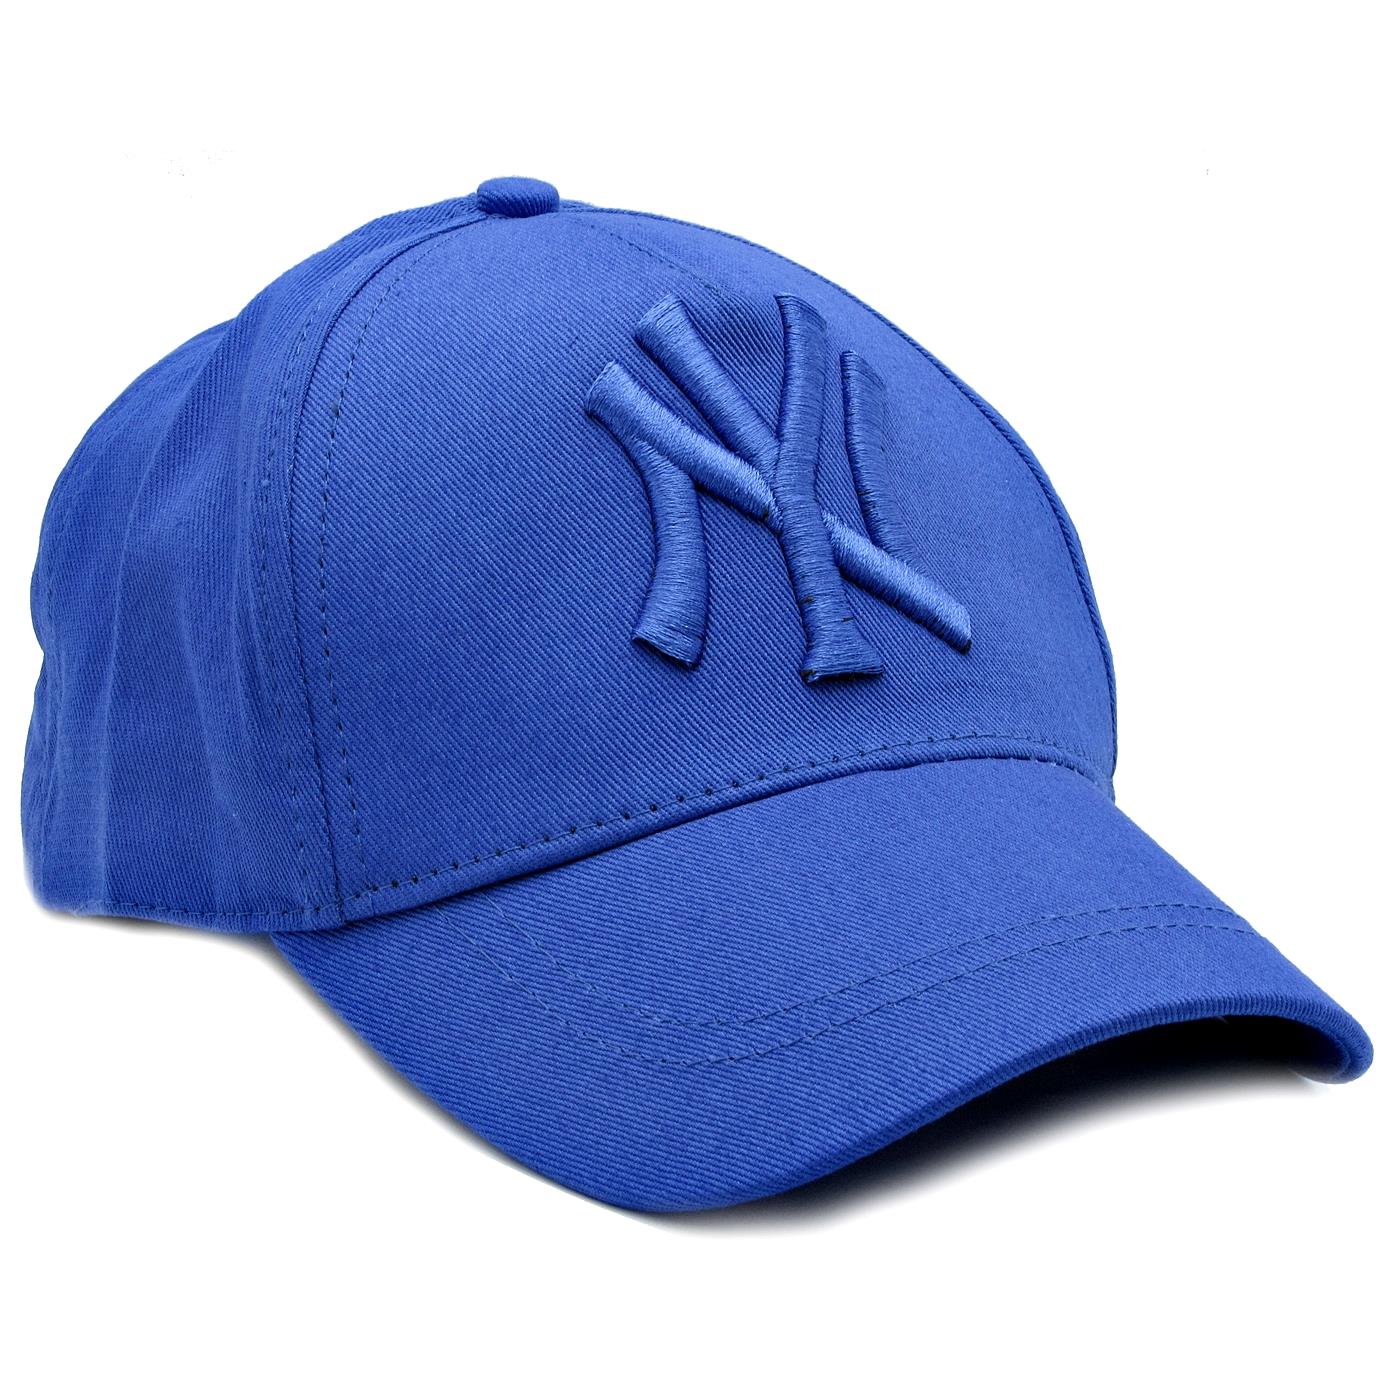 NY Cap Unisex Şapka cp220 - Mavi Mavi Yazılı